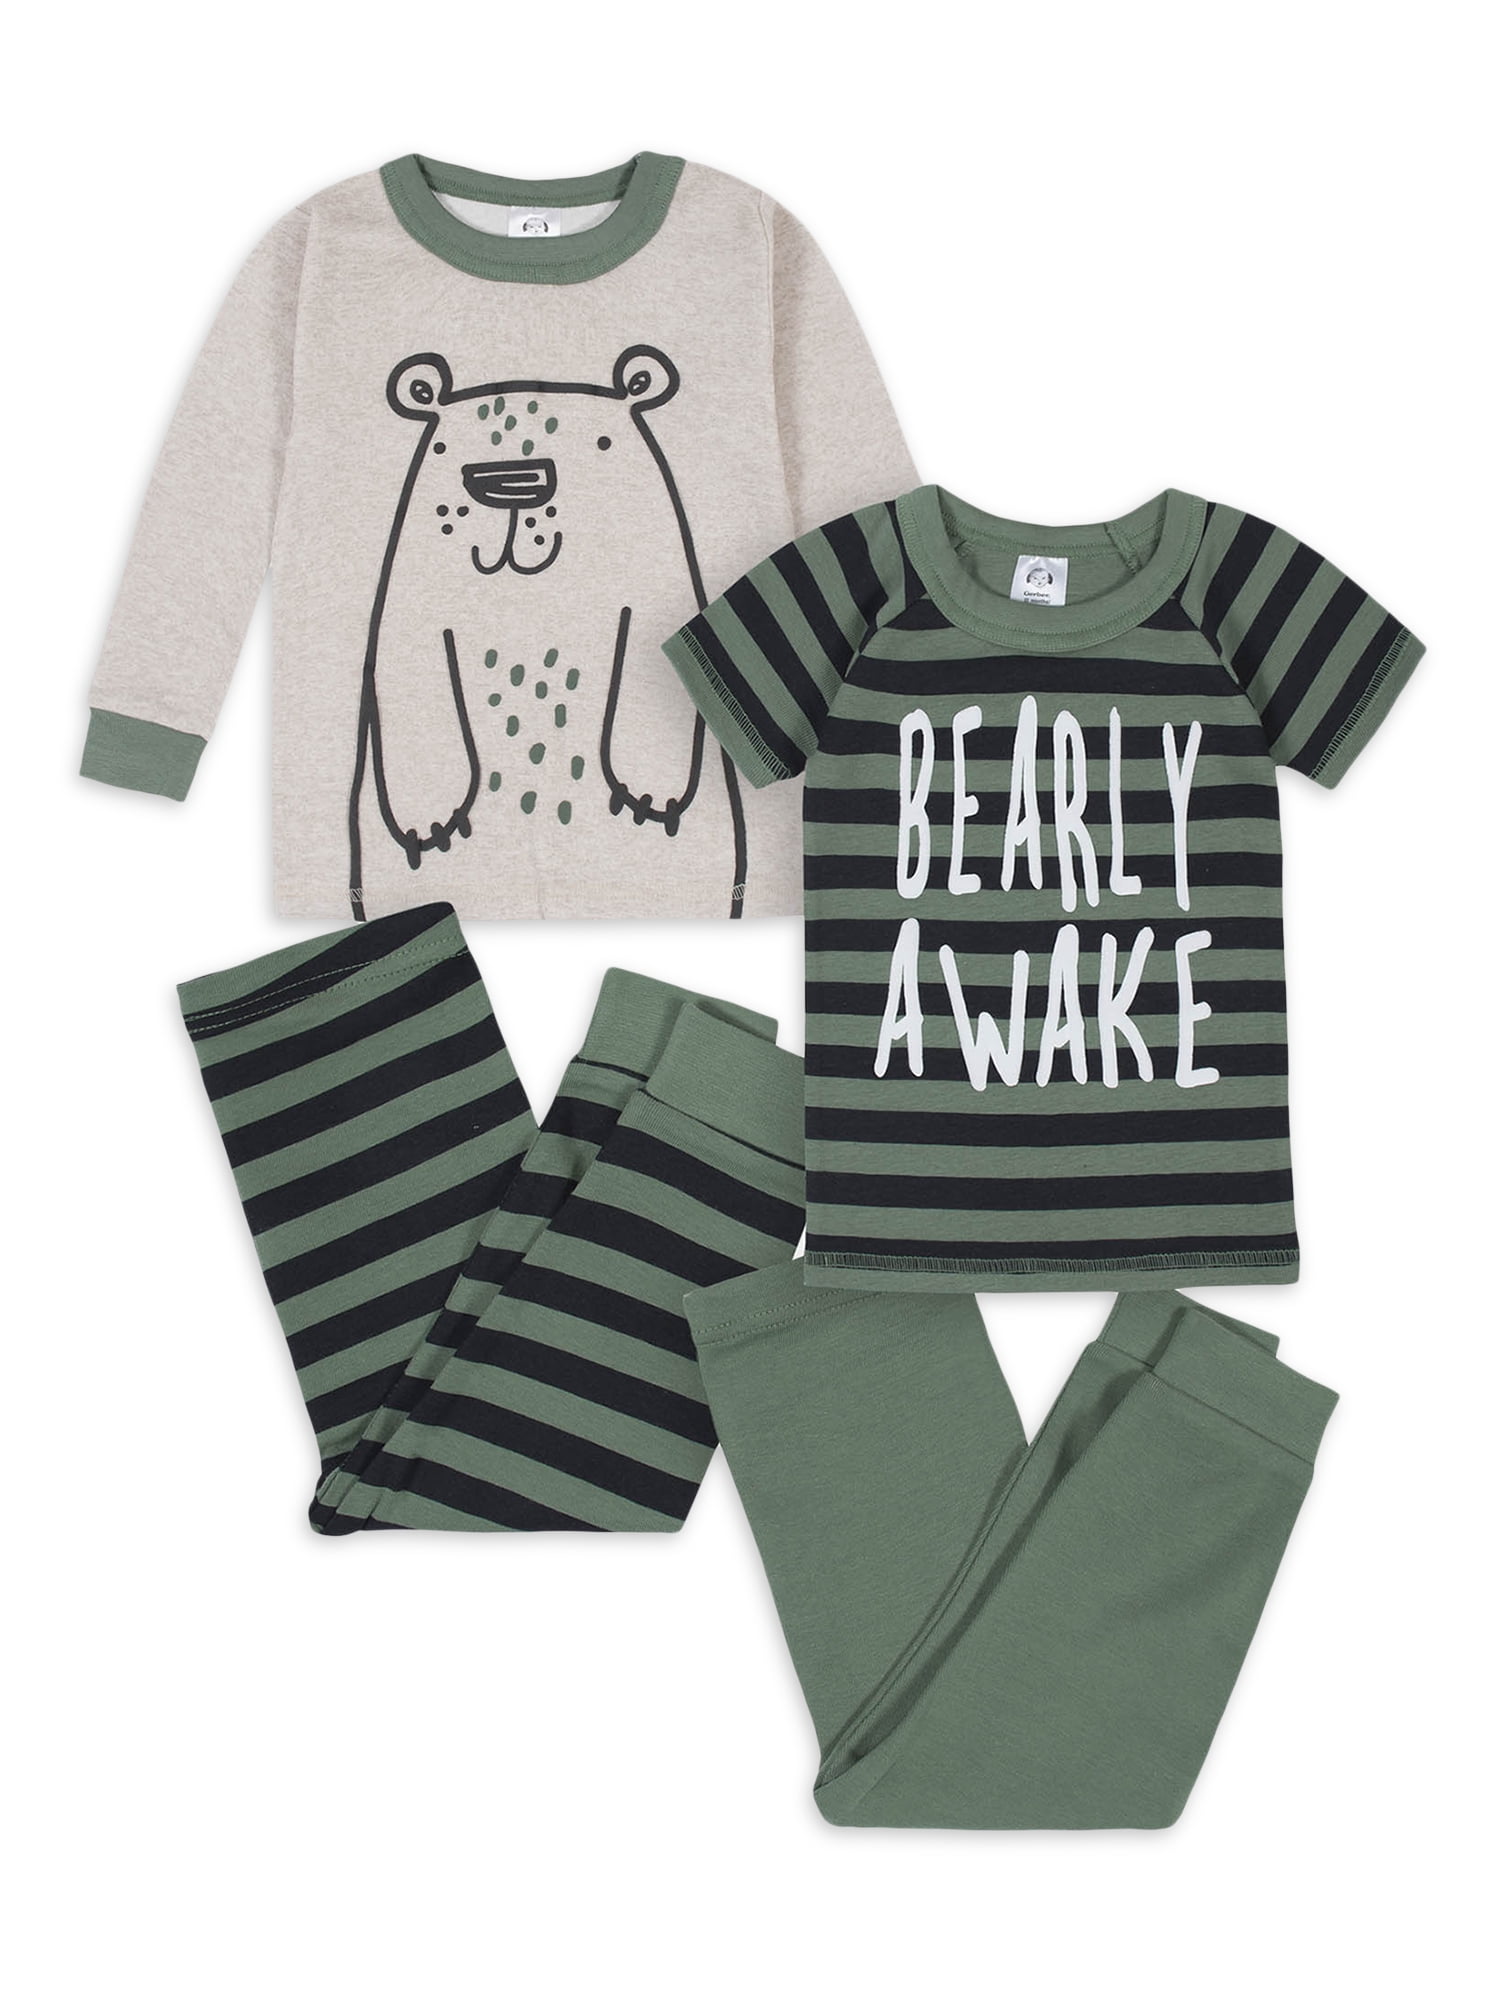 Tstars Pajamas for Kids Toddler 100% Cotton Snug Fit Long Sleeve Sleepwear Christmas Pj 